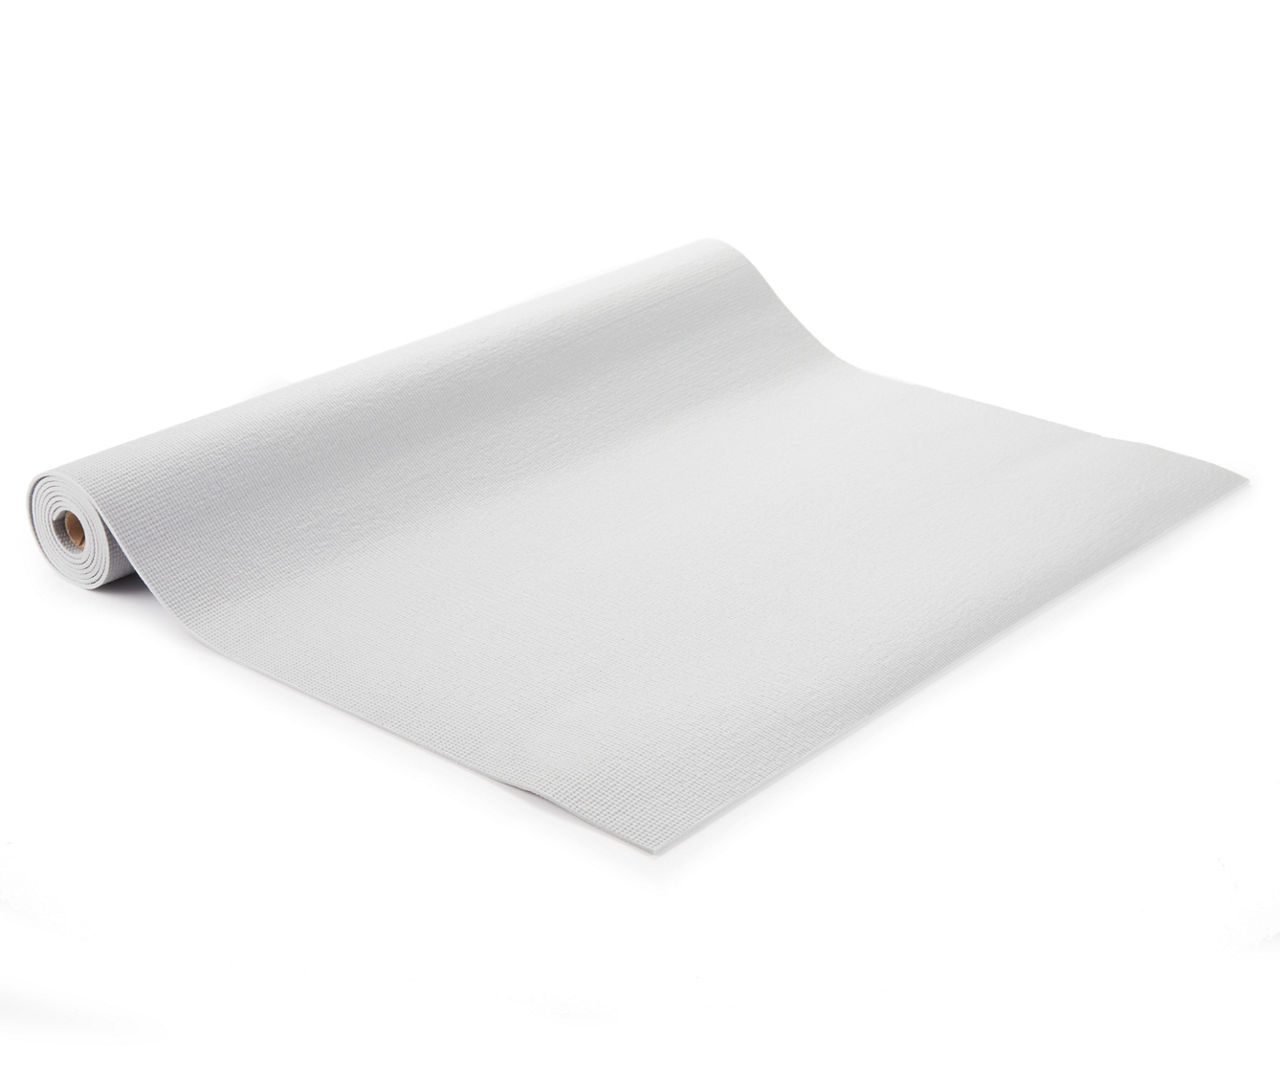 Con-Tact Extra Thick Grip Ultra 12 x 15 Light Gray Shelf & Drawer Liner | Big Lots